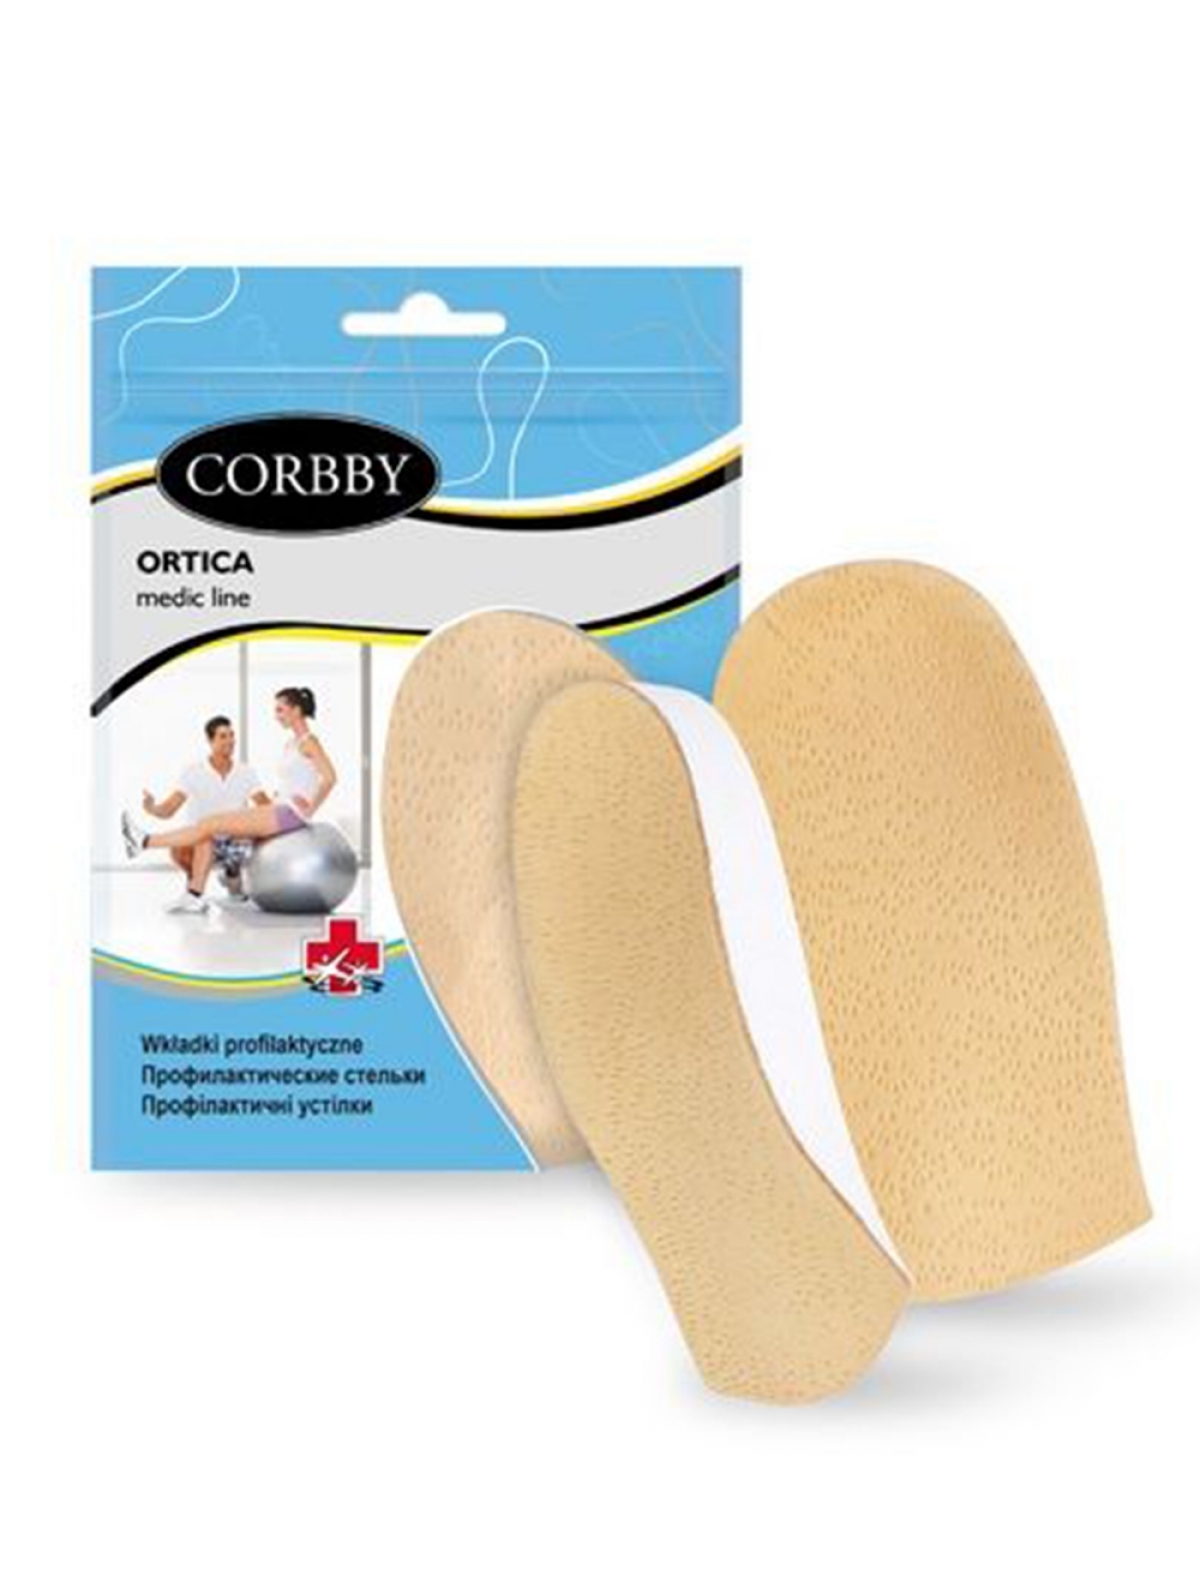 Corbby 6308 стельки ортопедические